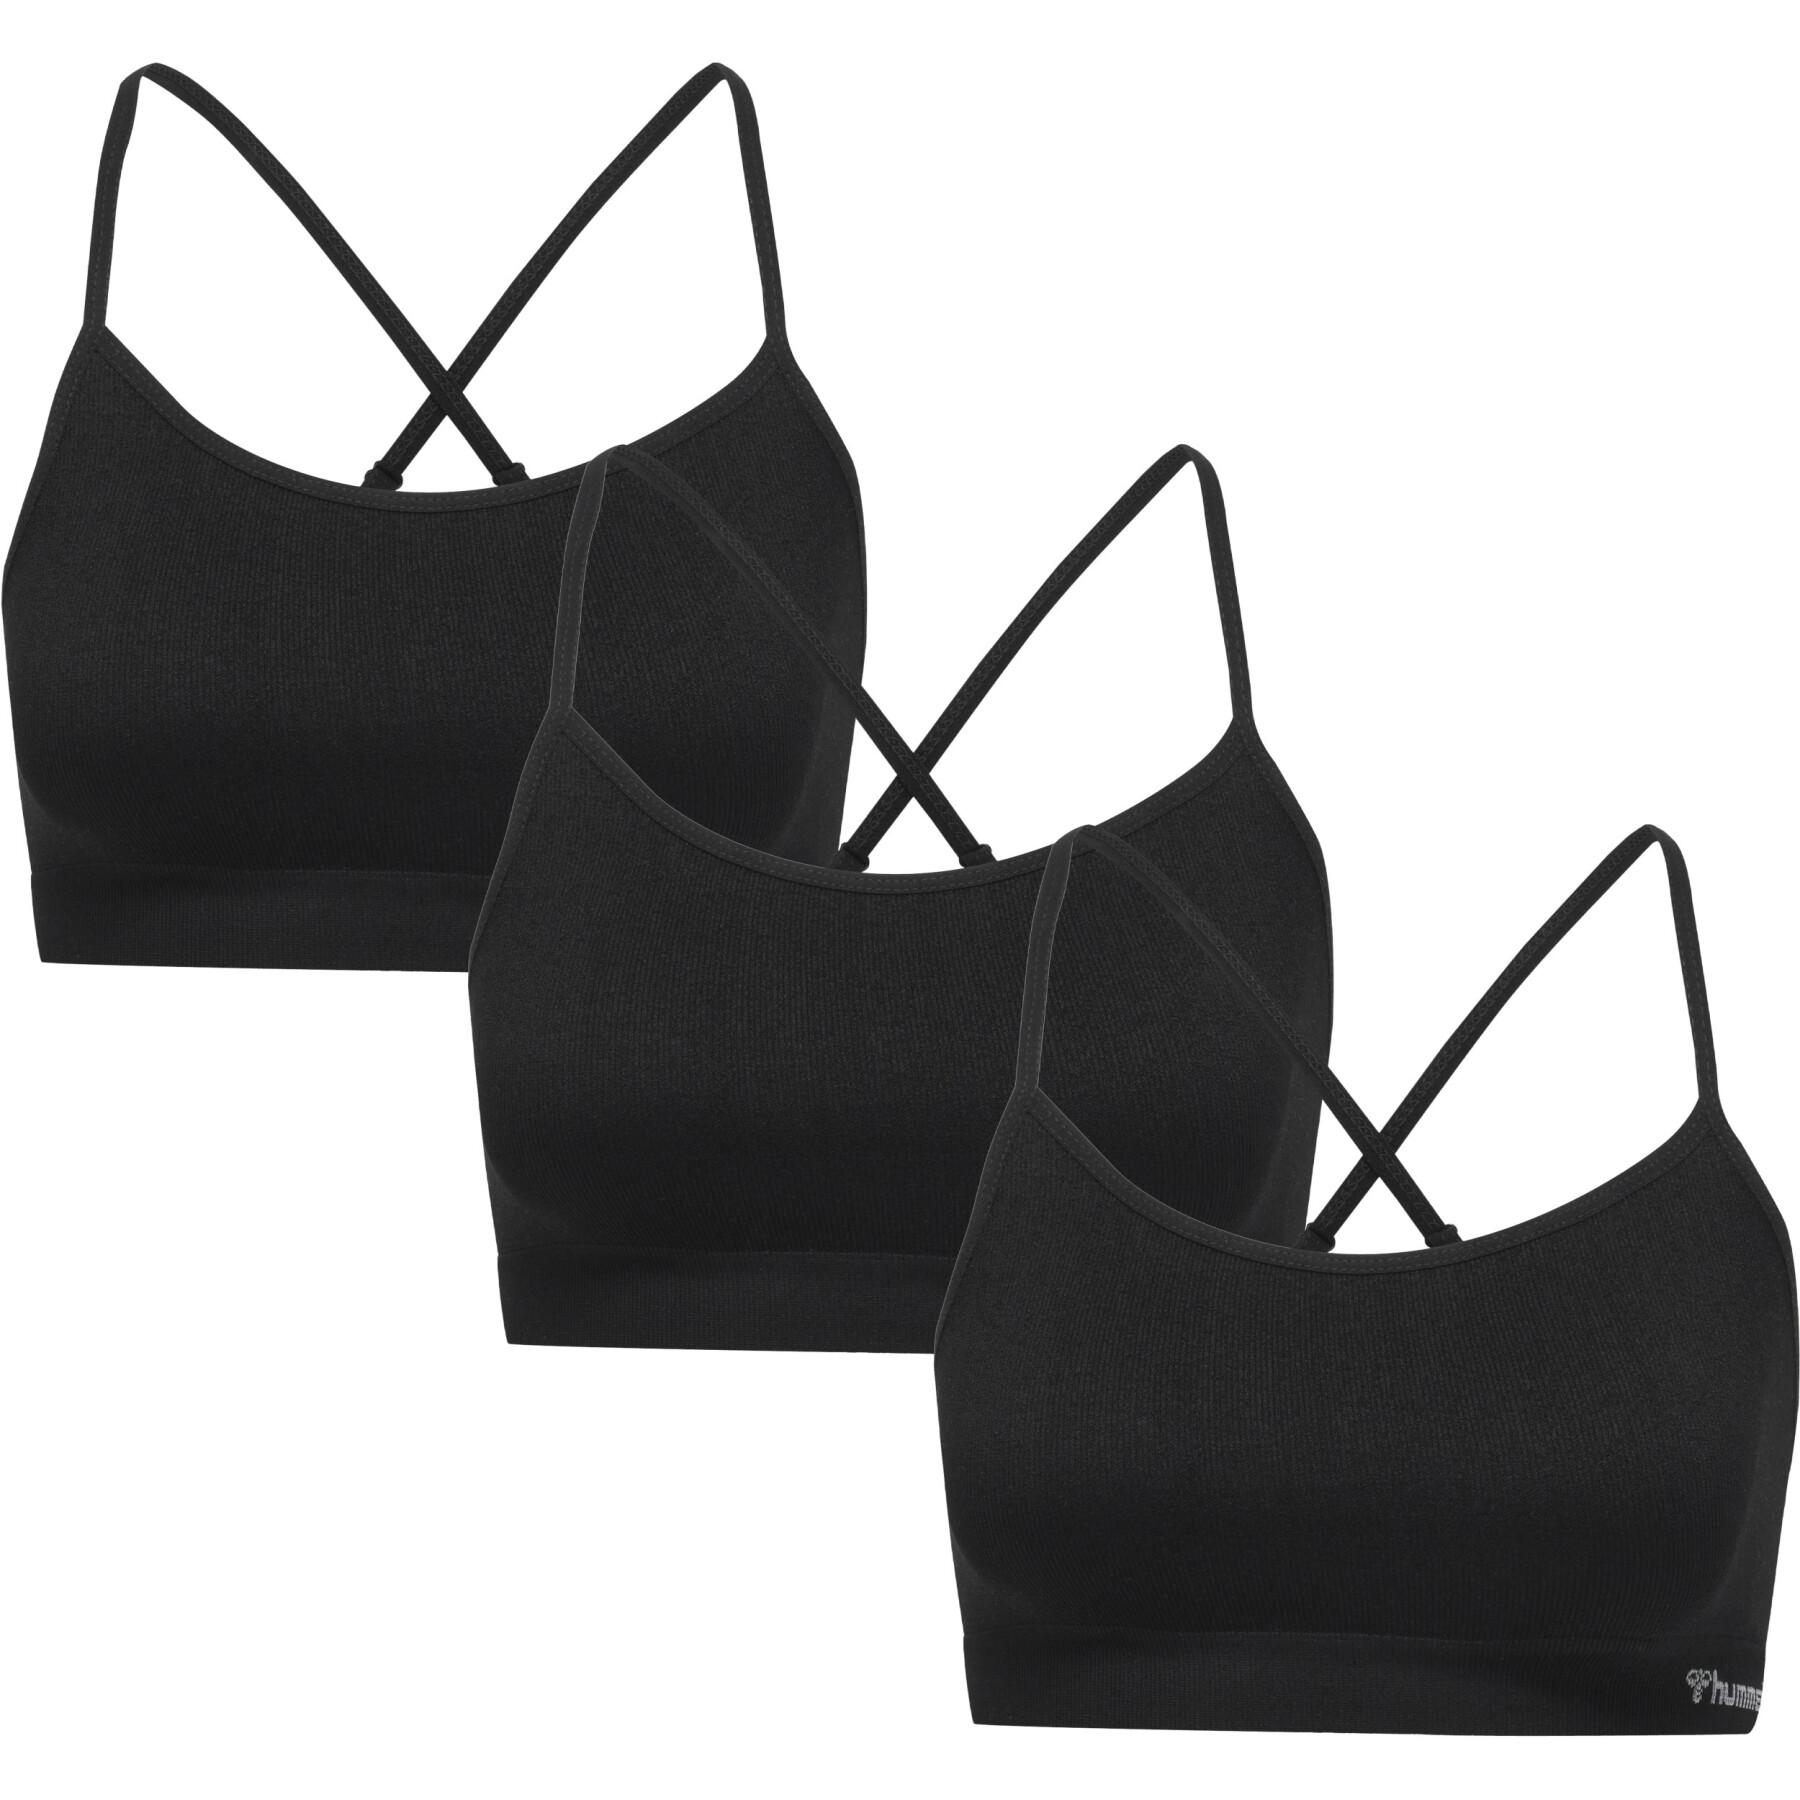 Women's bras Hummel Juno (x3) - Hummel - Brands - Lifestyle